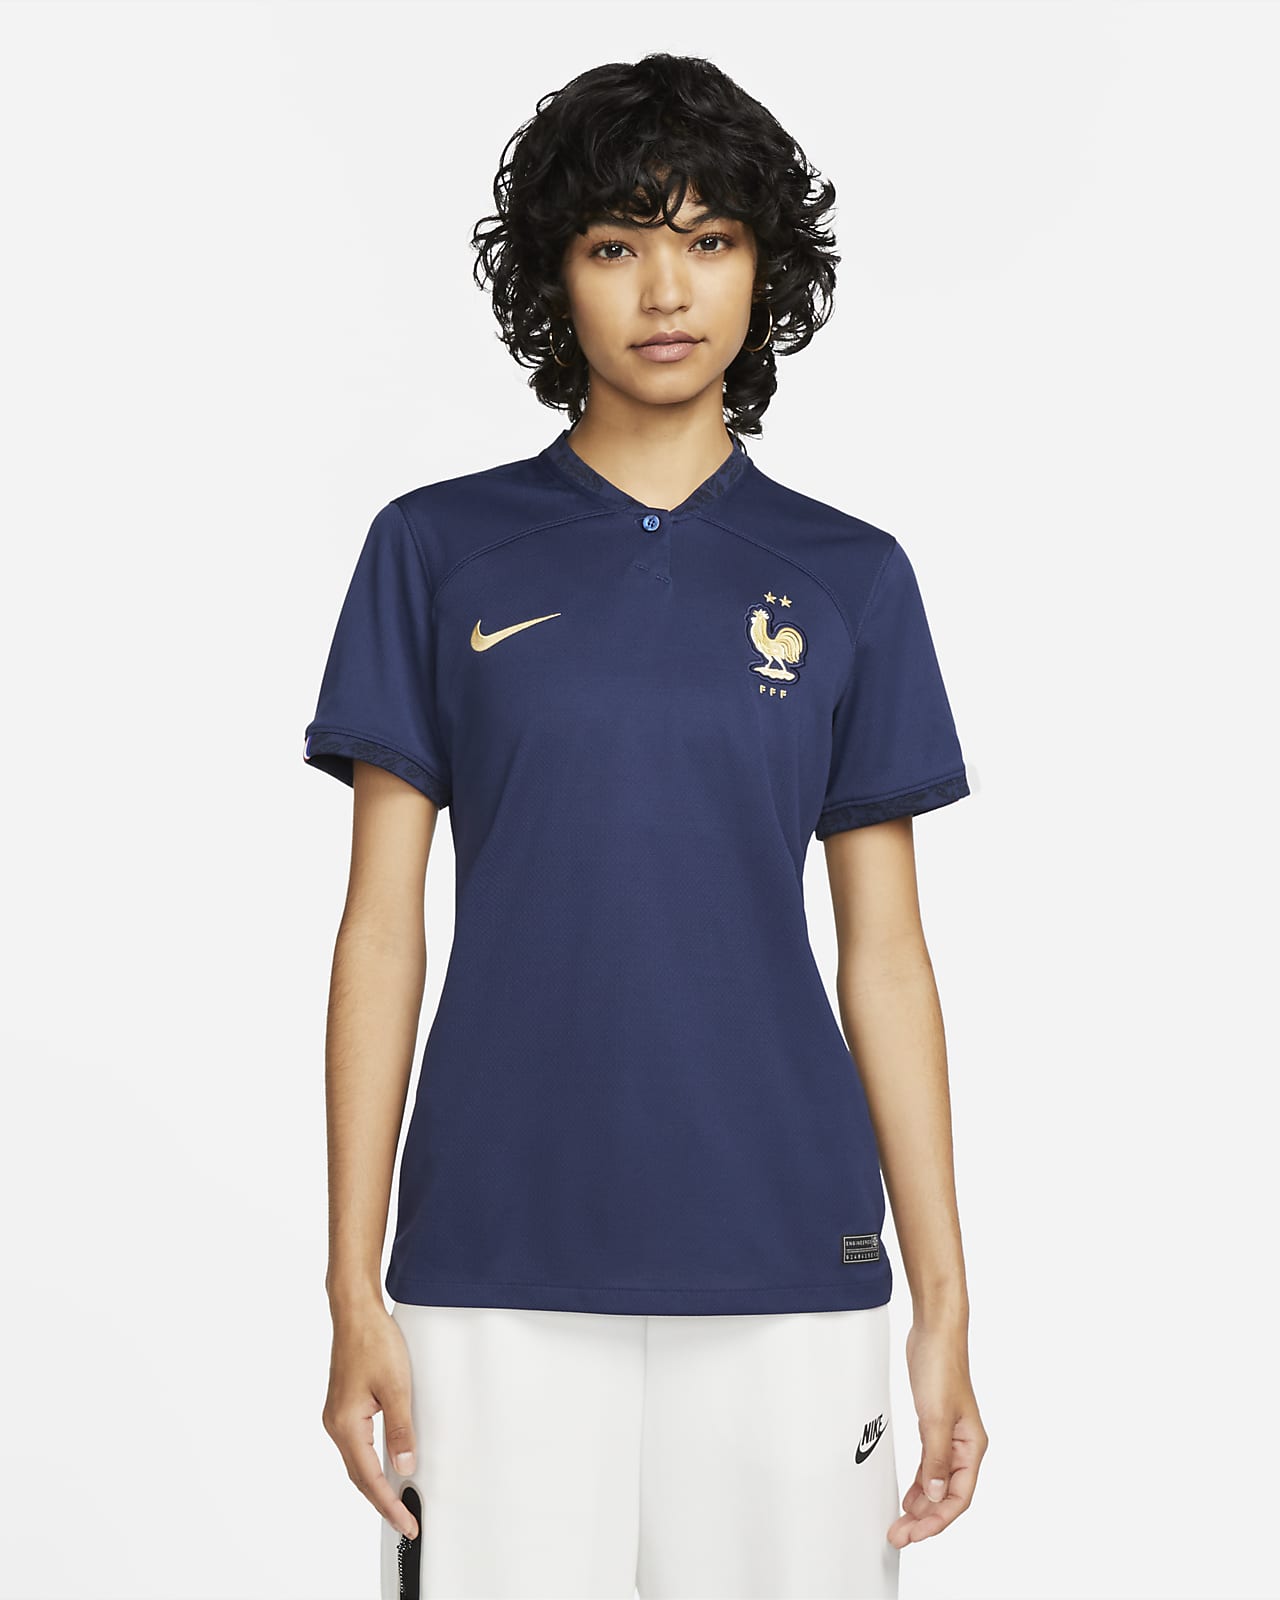 FFF 2022/23 Stadium Home Women's Nike Dri-FIT Football Shirt